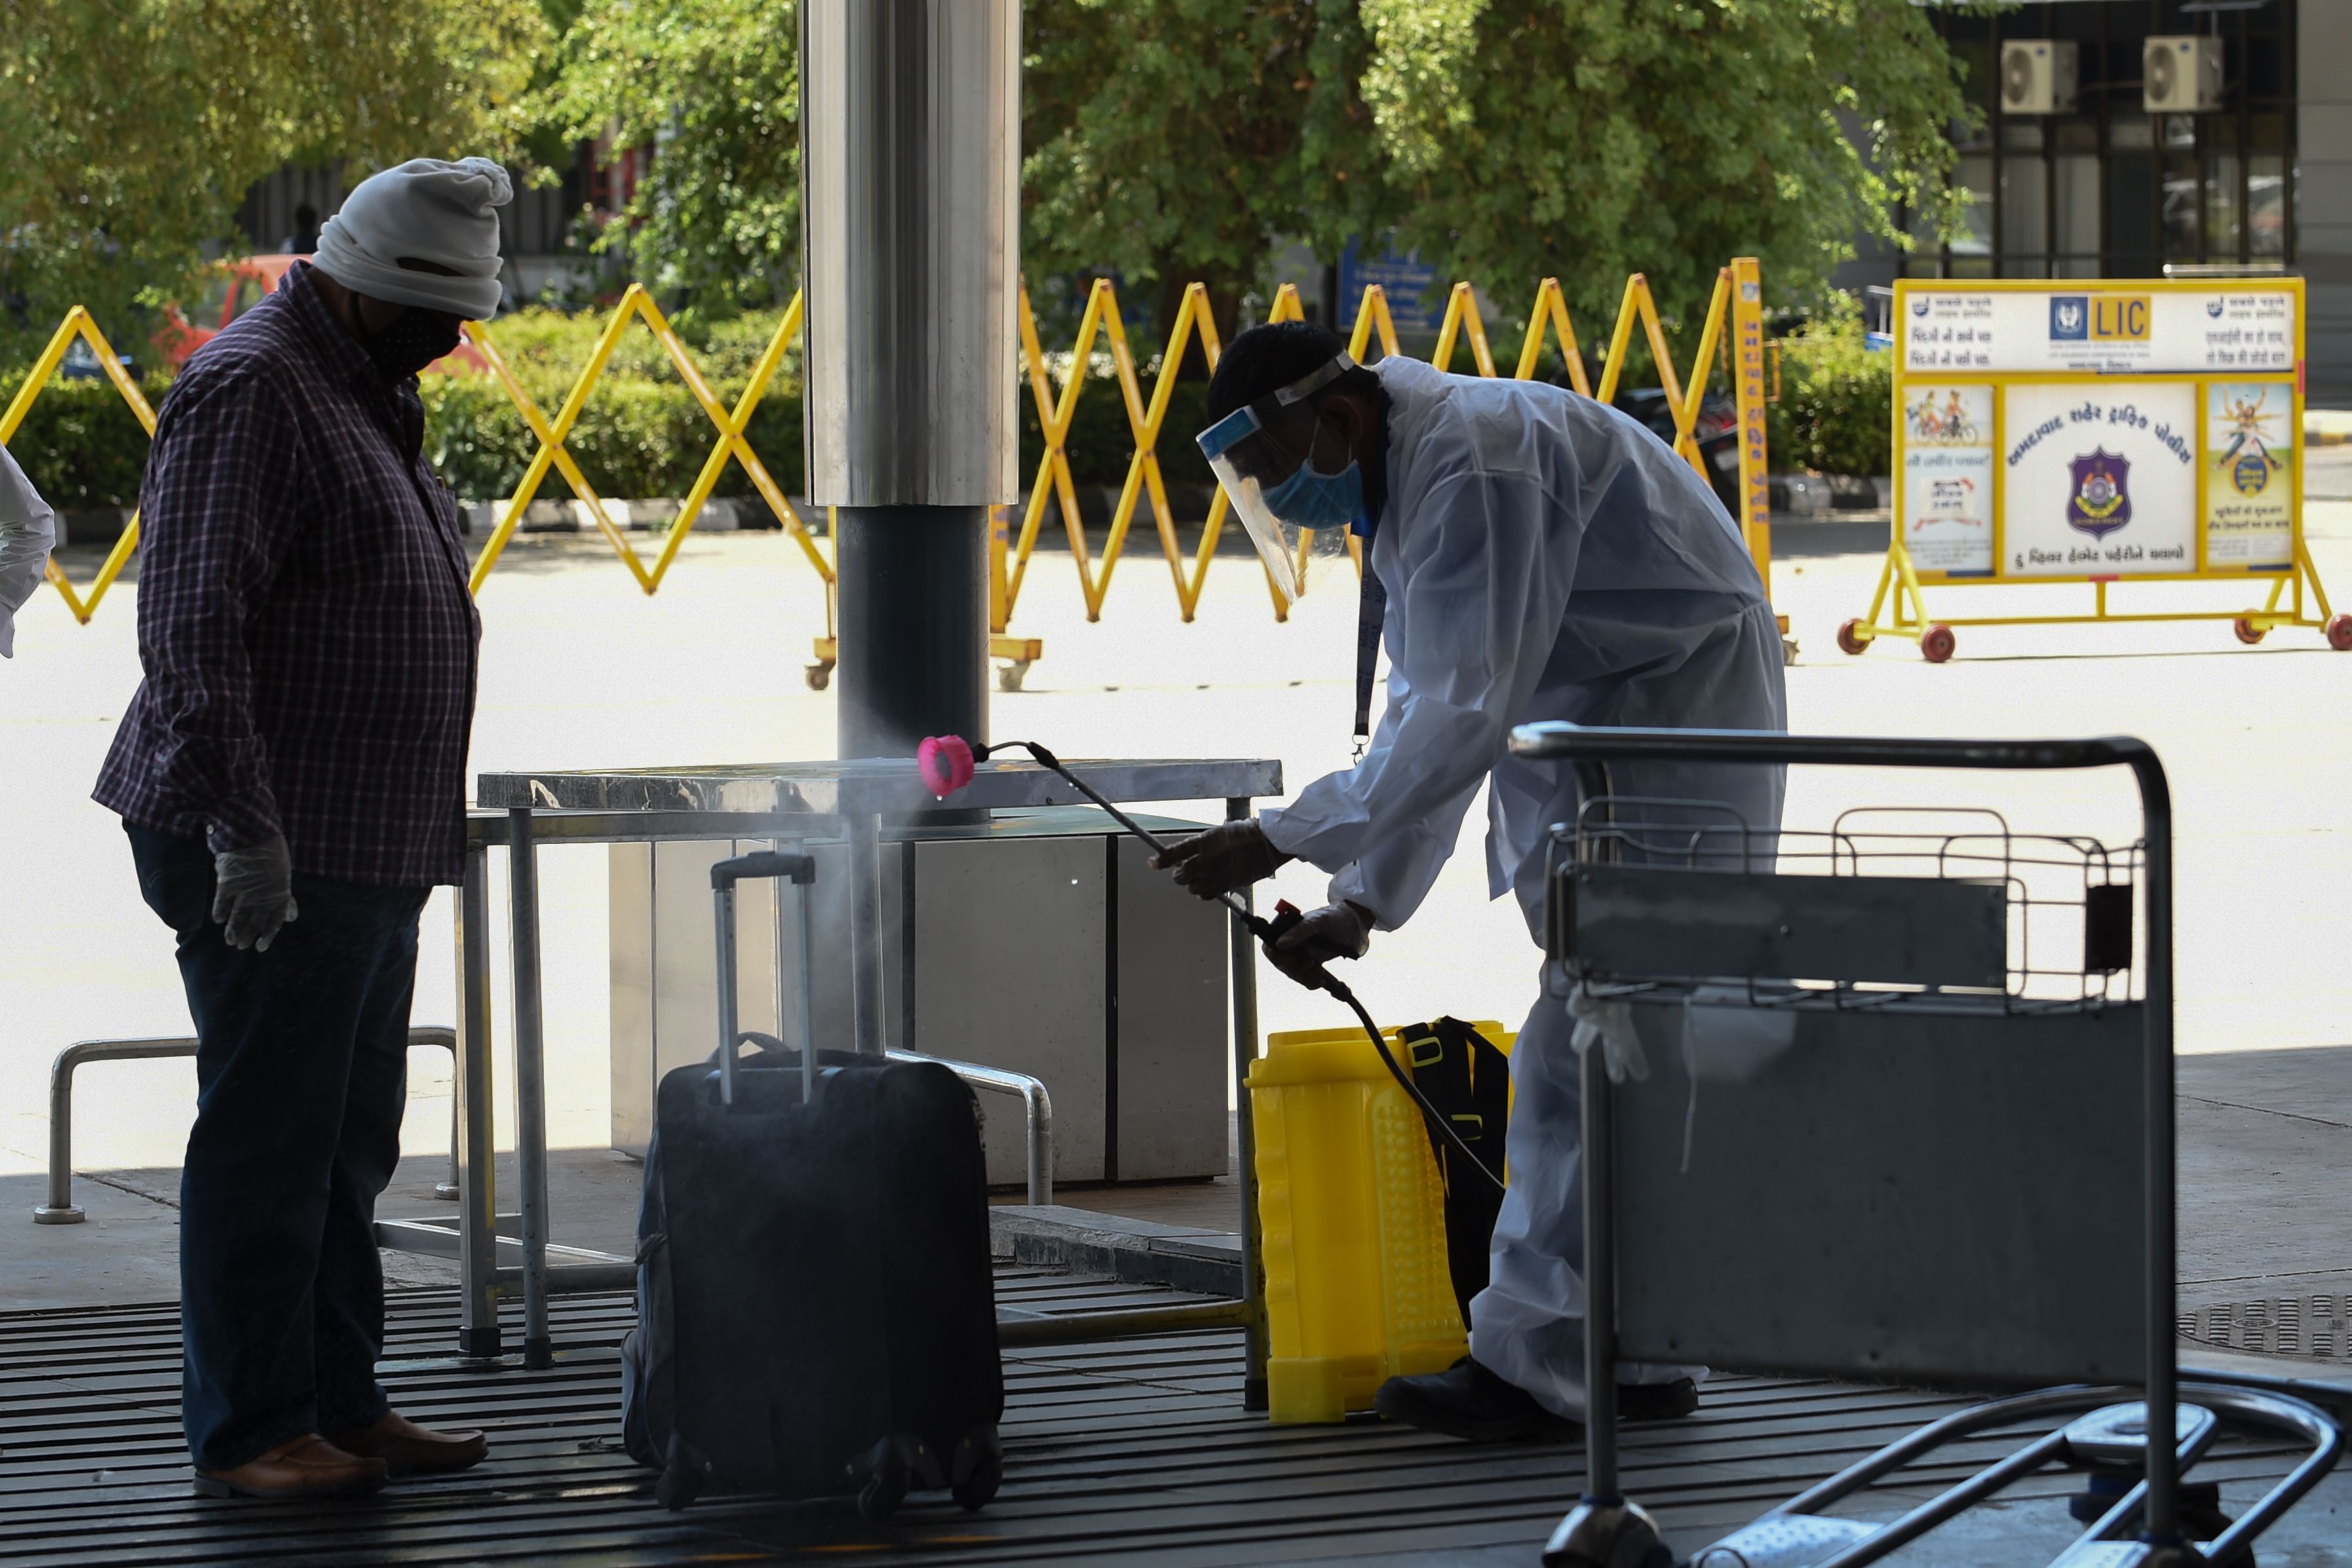 Passengers Luggage should be sanitize